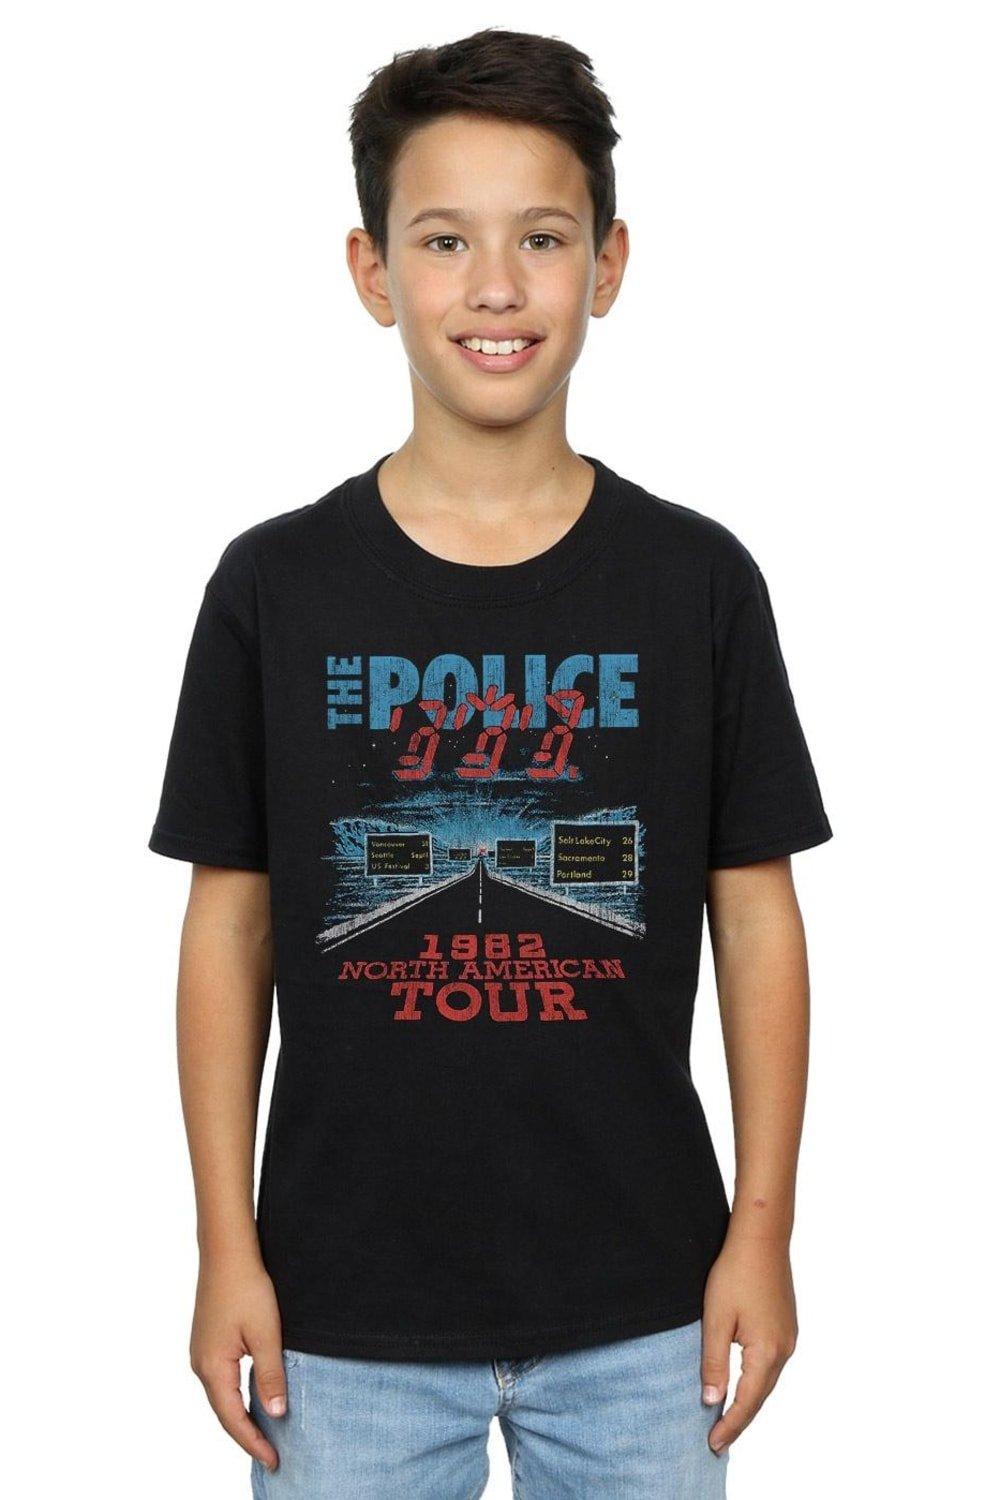 North American Tour V2 T-Shirt